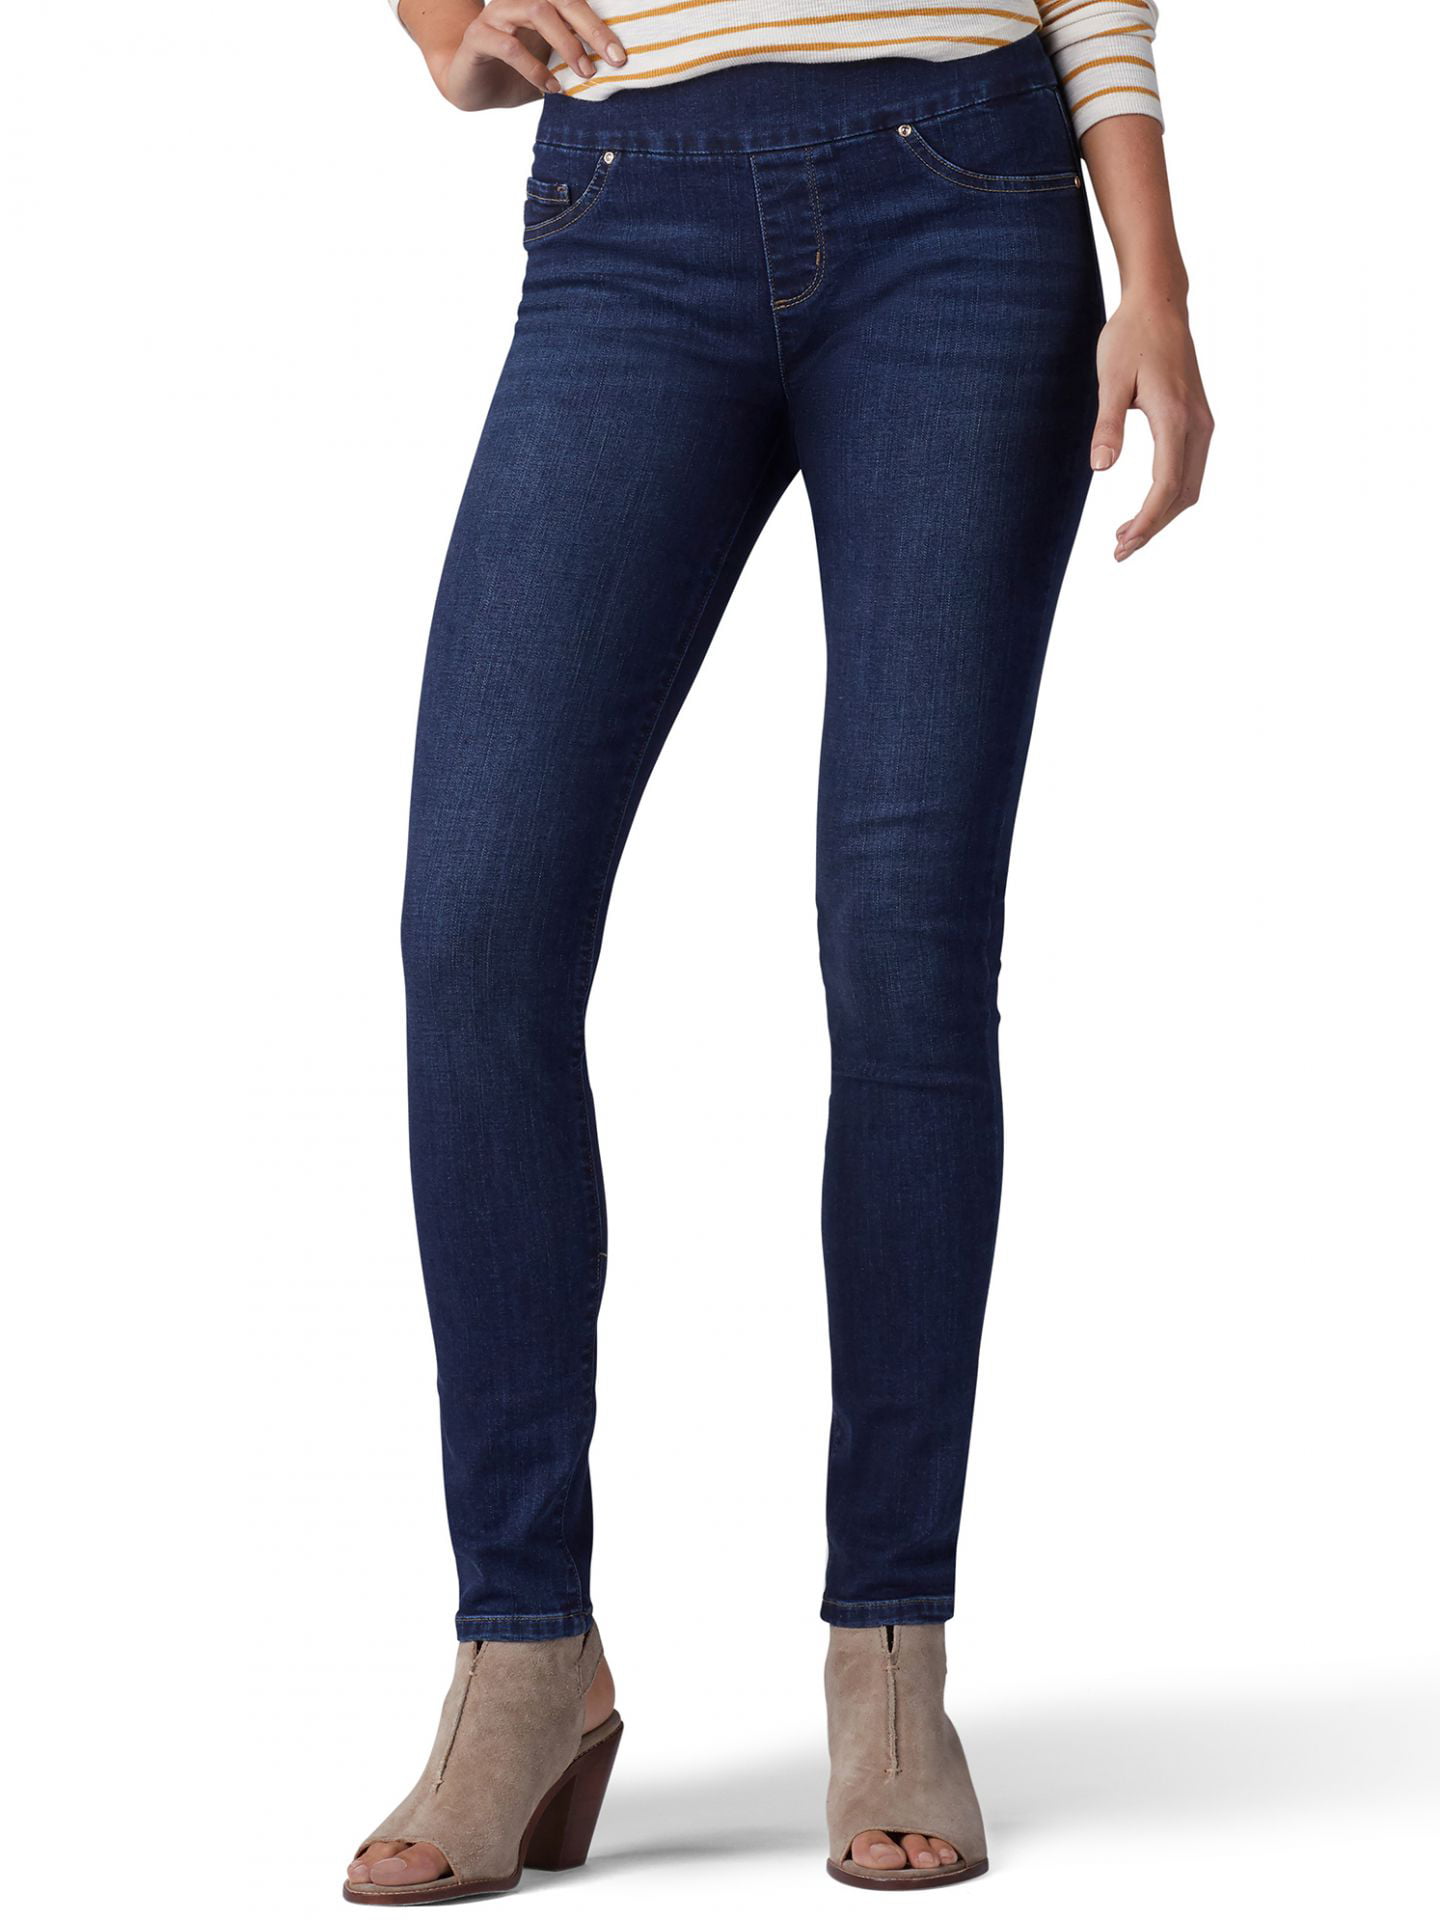 Lee Women's Sculpting Slim Fit Skinny Pull-On Jeans - Infinity, Infinity,  10 Short - Walmart.com